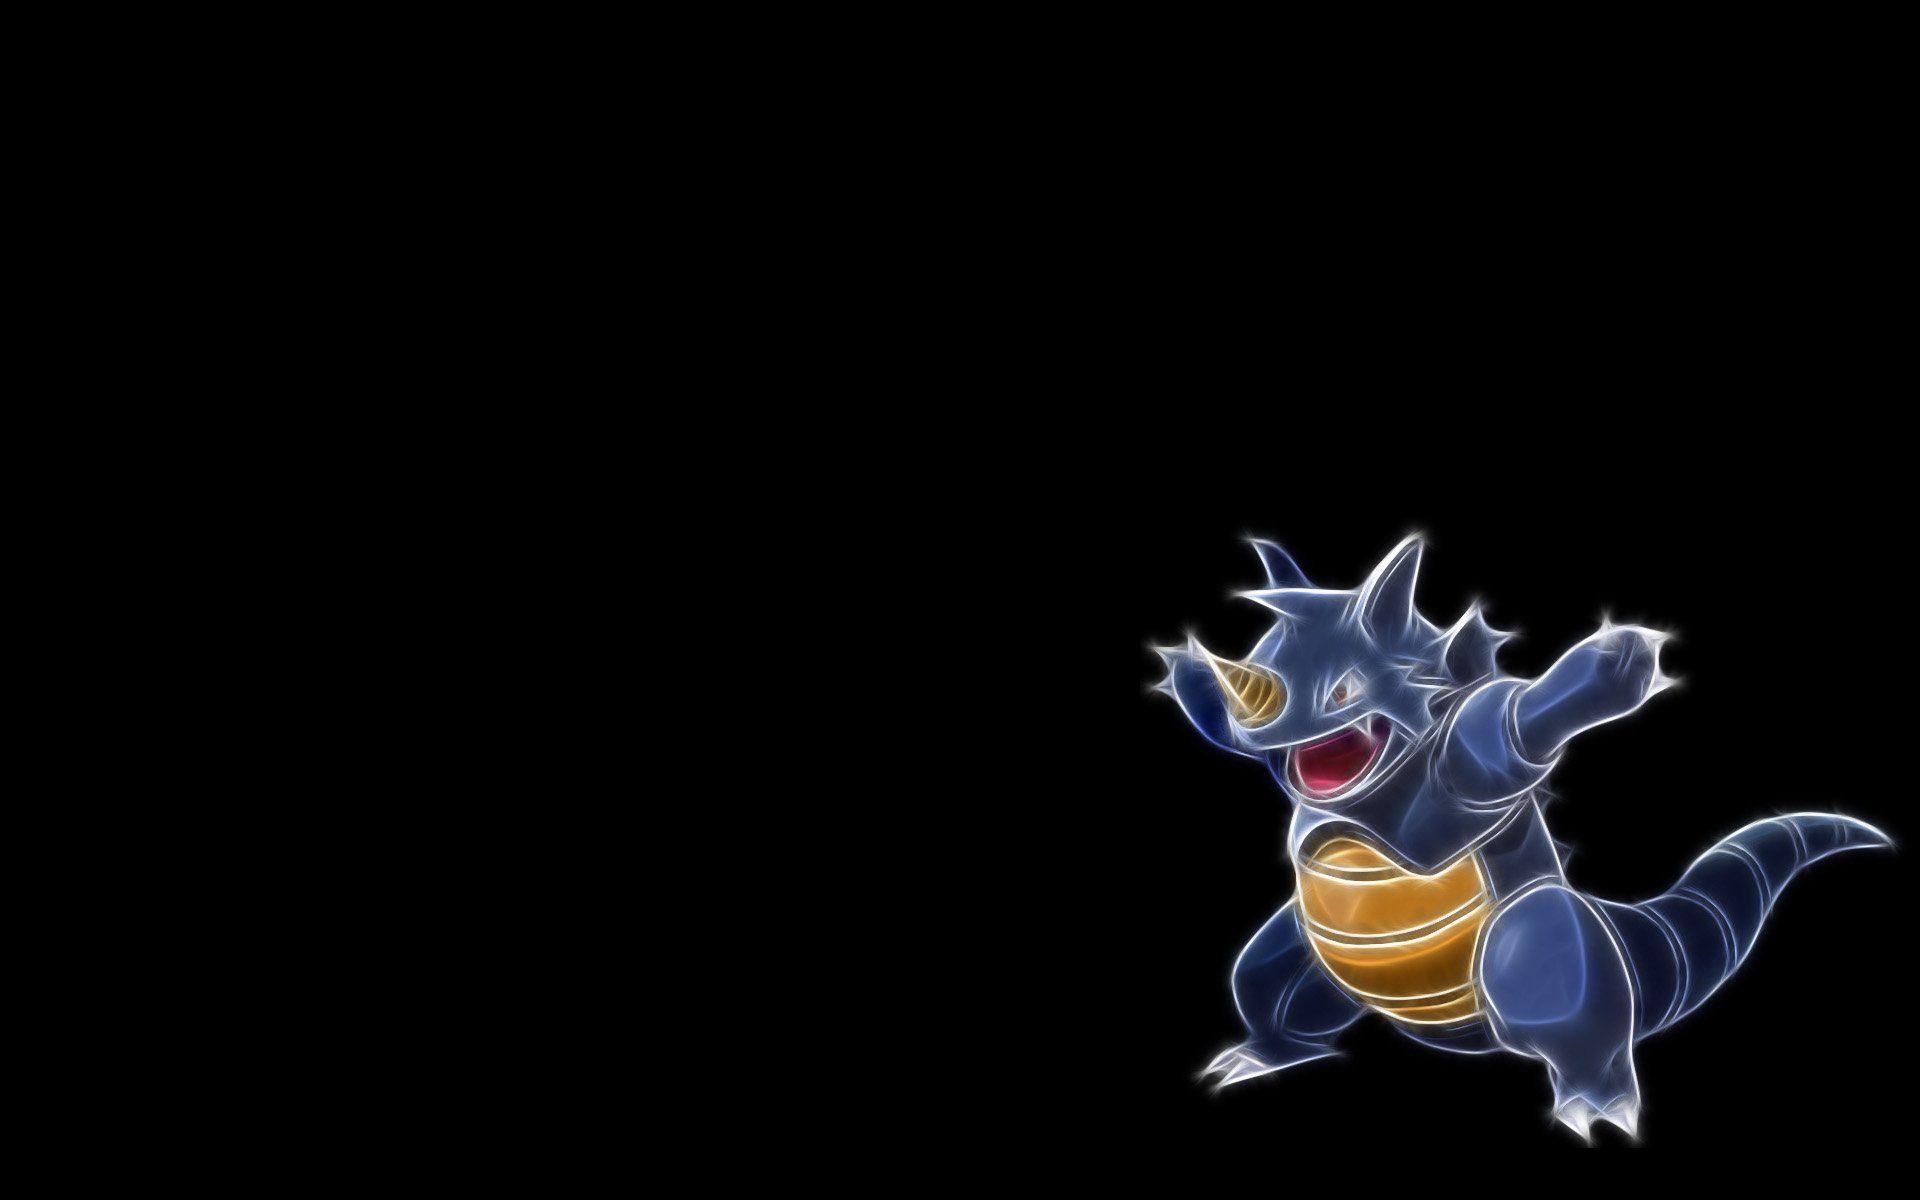 Rhydon (Pokemon) HD Wallpaper and Background Image